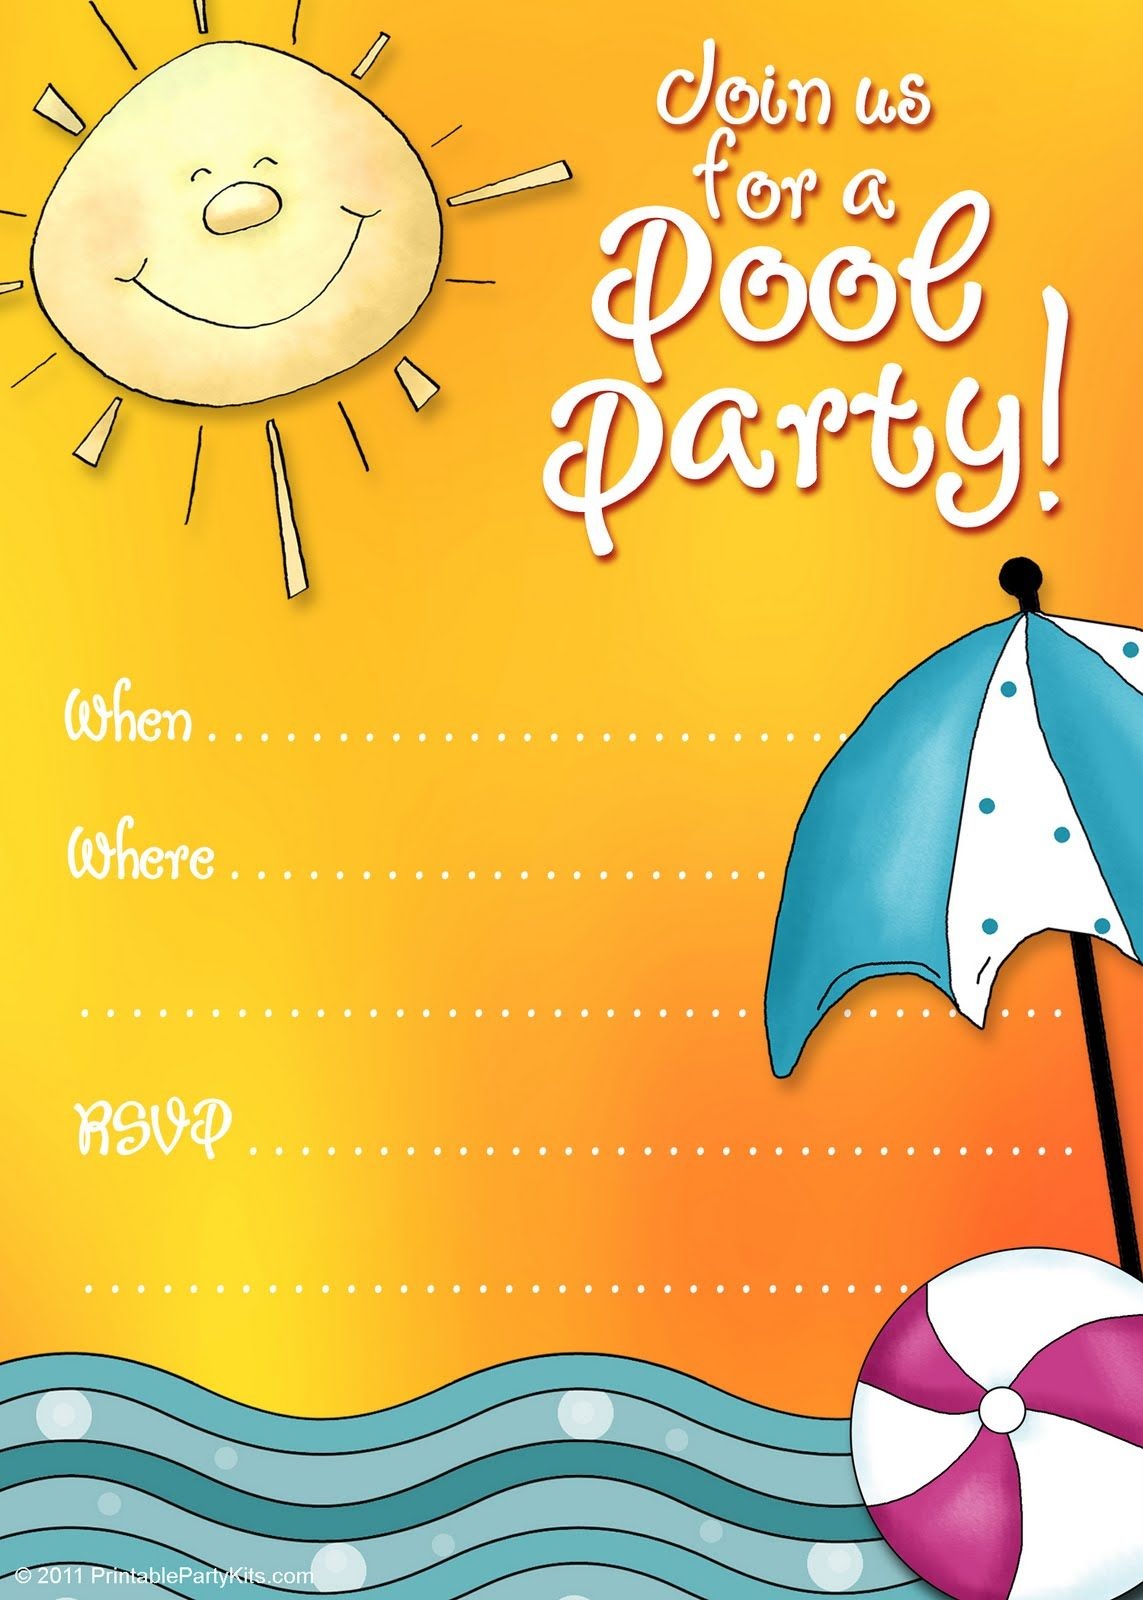 Free Printable Party Invitations: Summer Pool Party Invites | Adhd - Free Printable Pool Party Birthday Invitations